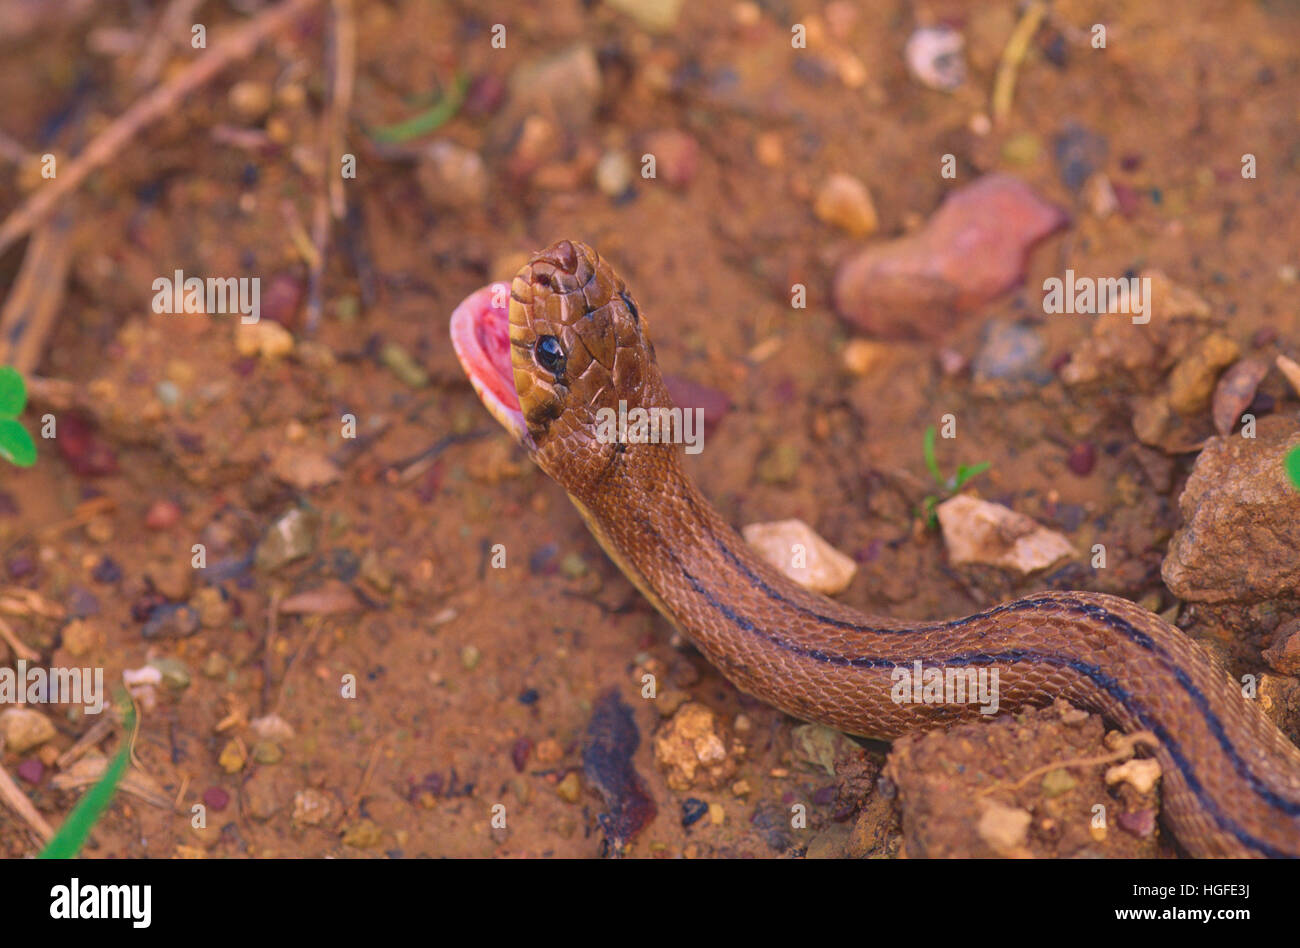 173 fotos de stock e banco de imagens de Snakes And Ladders - Getty Images